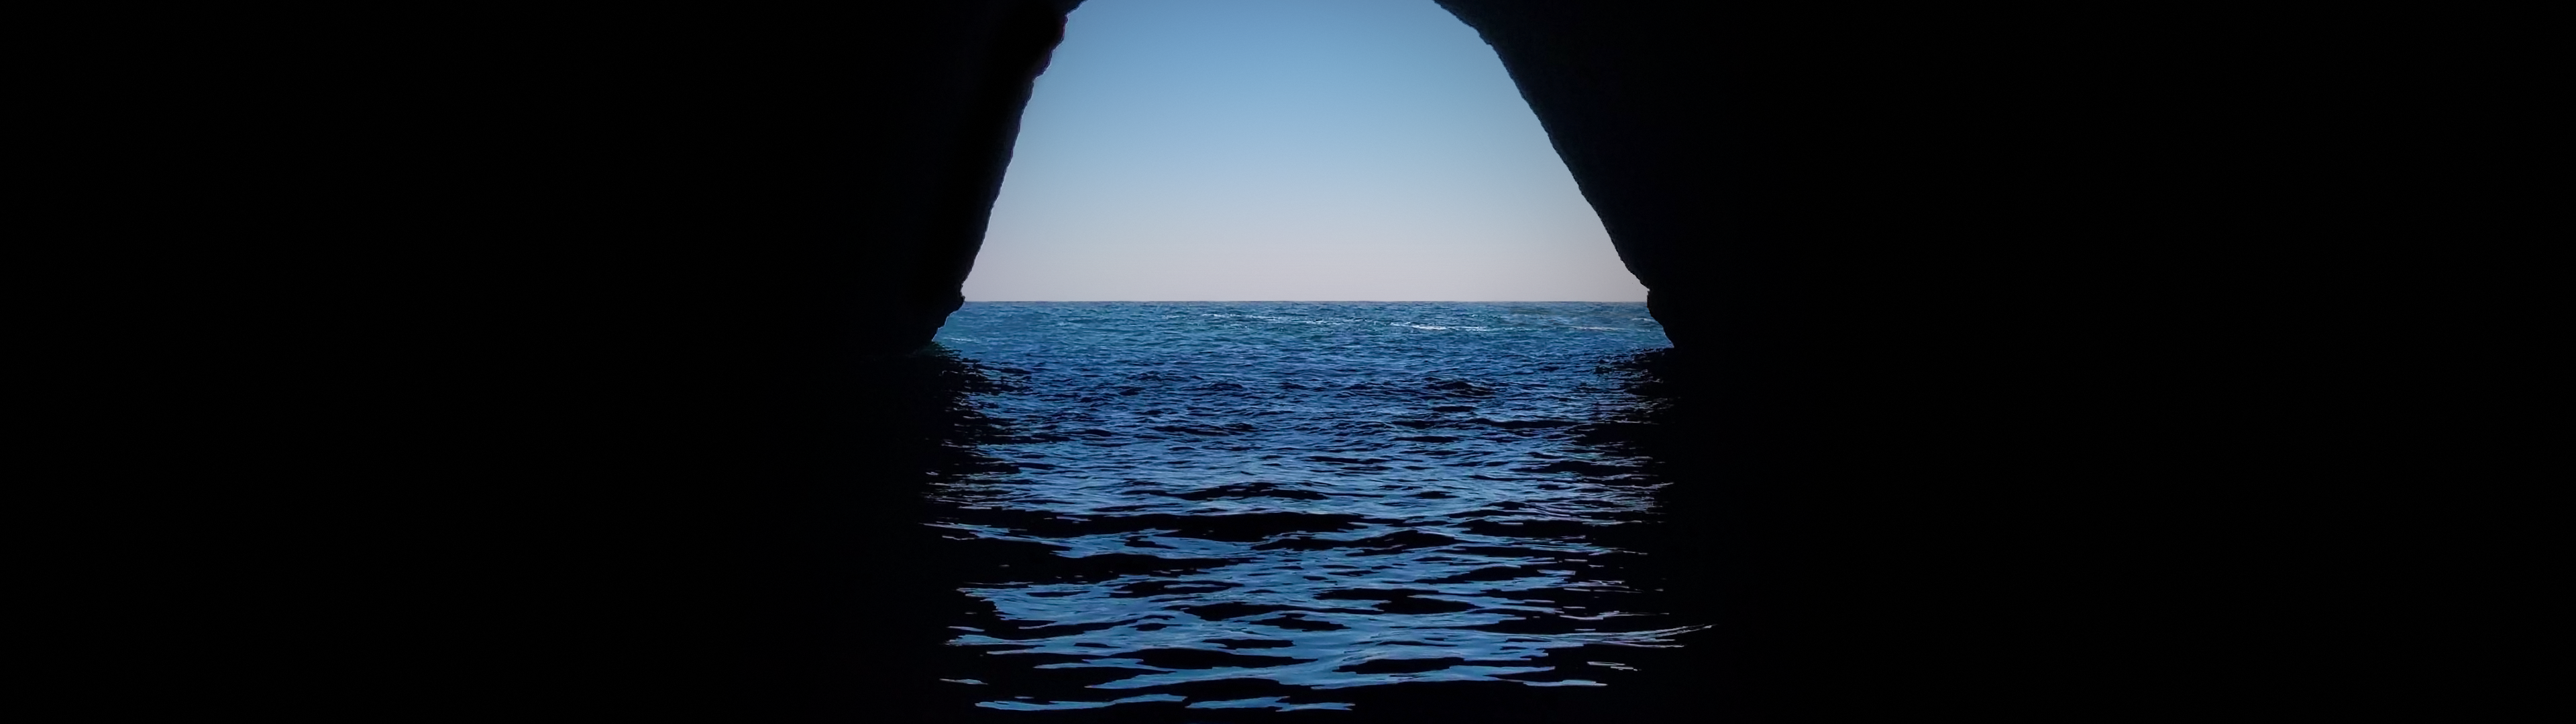 Cave Wallpaper 4K, Silhouette, Ocean, Dark Place, Seascape, Horizon, Nature